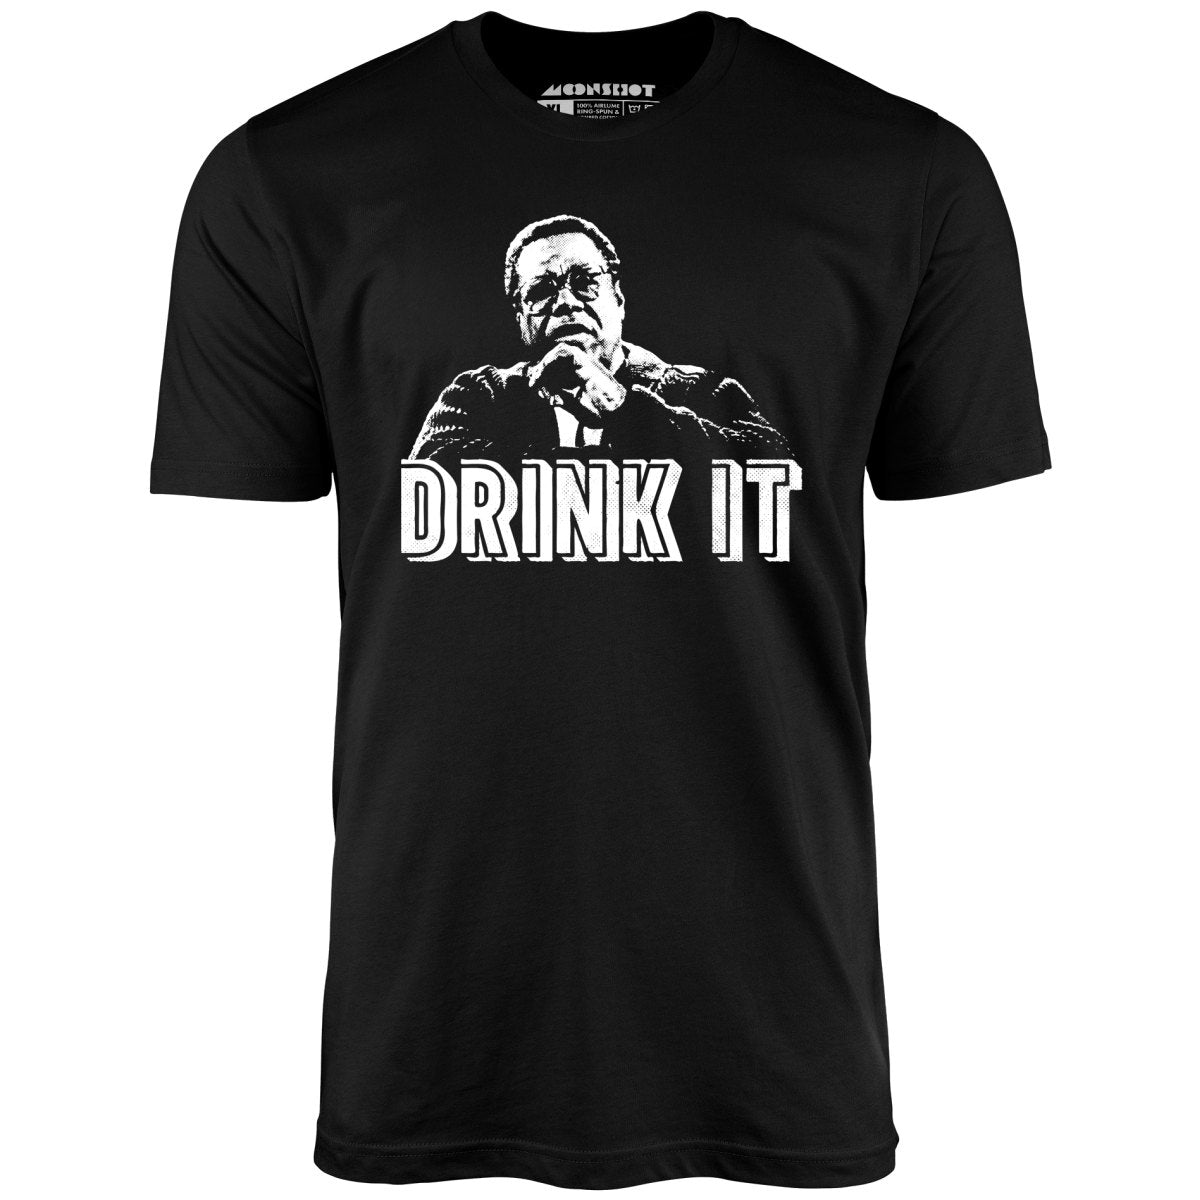 Drink It! - Unisex T-Shirt